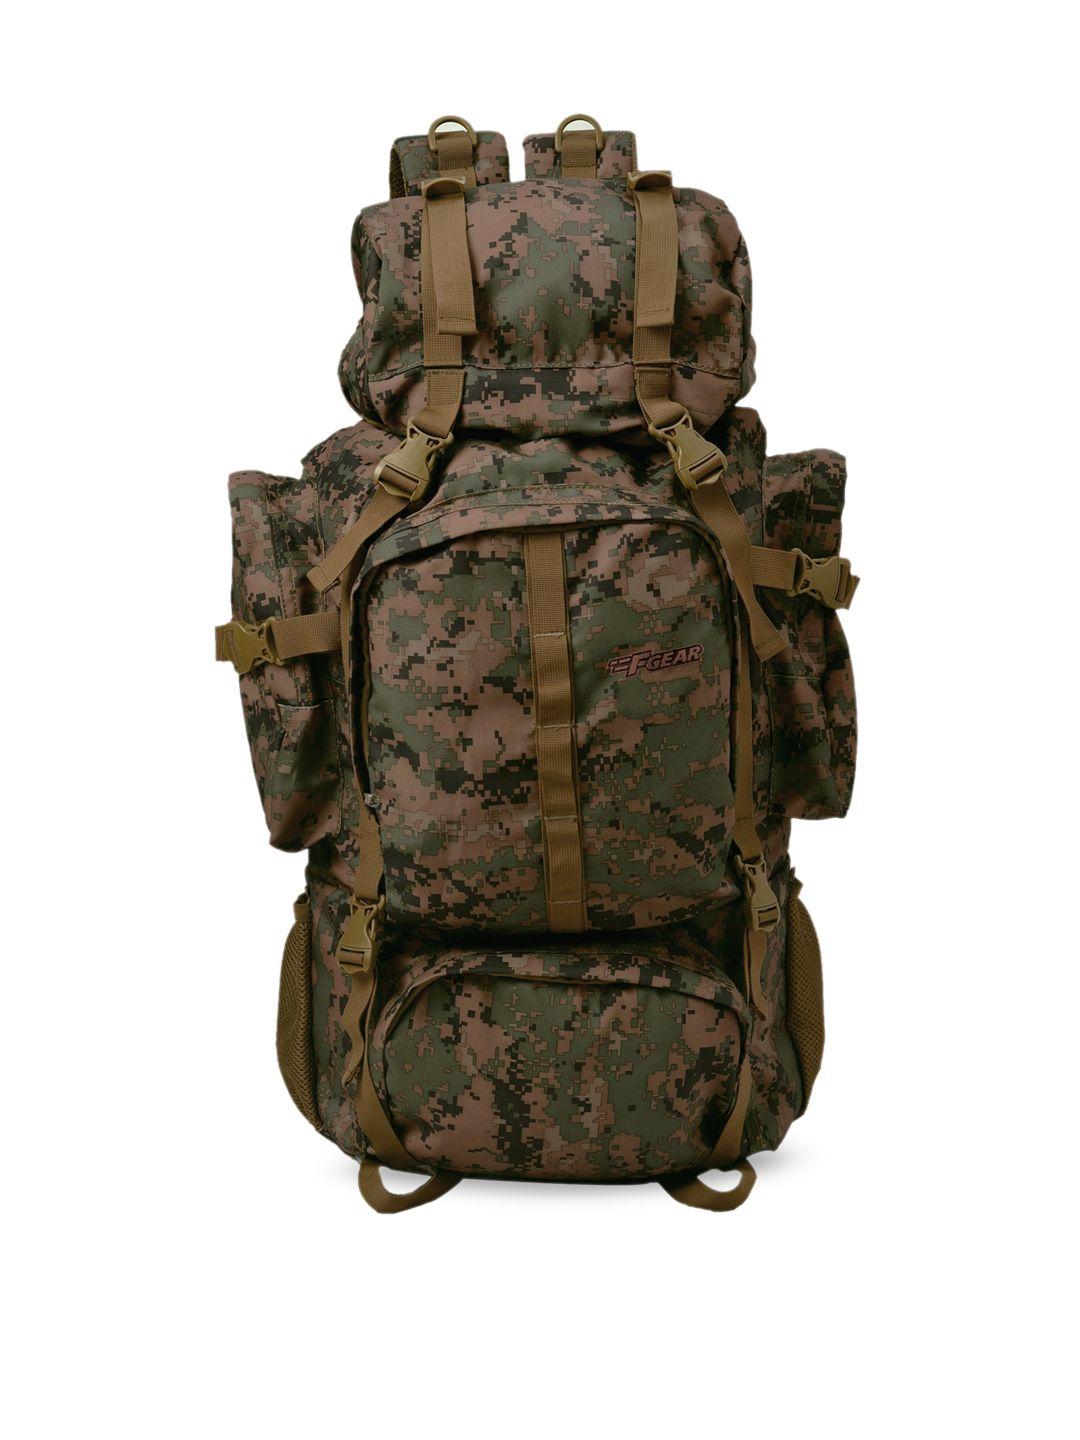 f gear unisex green & beige printed military neutron marpat wl rucksacks